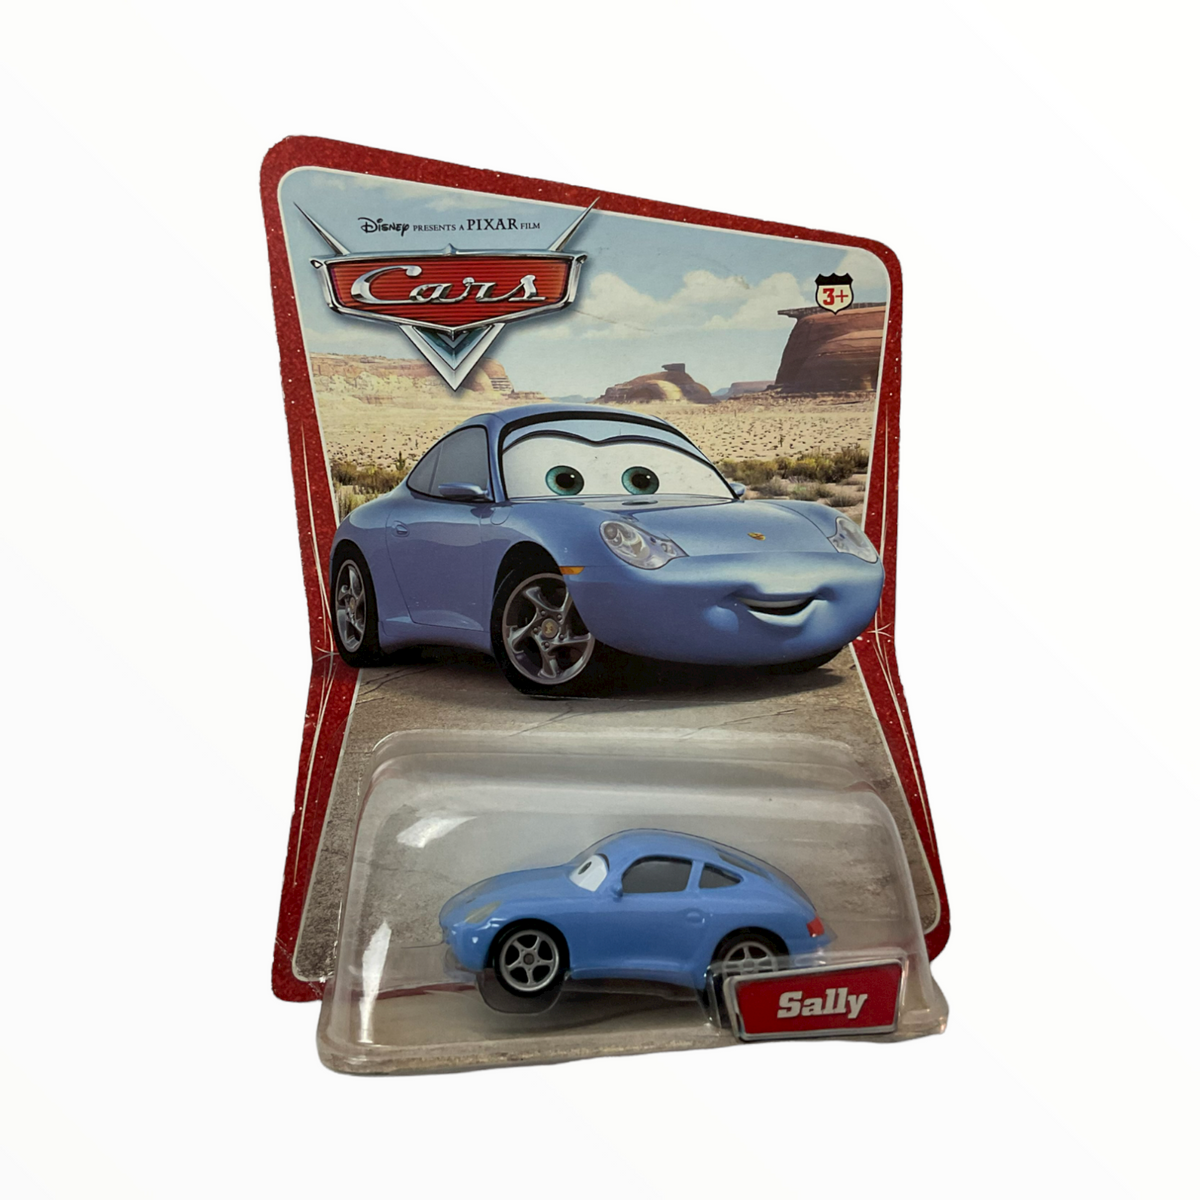 Disney Pixar Cars Sally 1:55 Scale